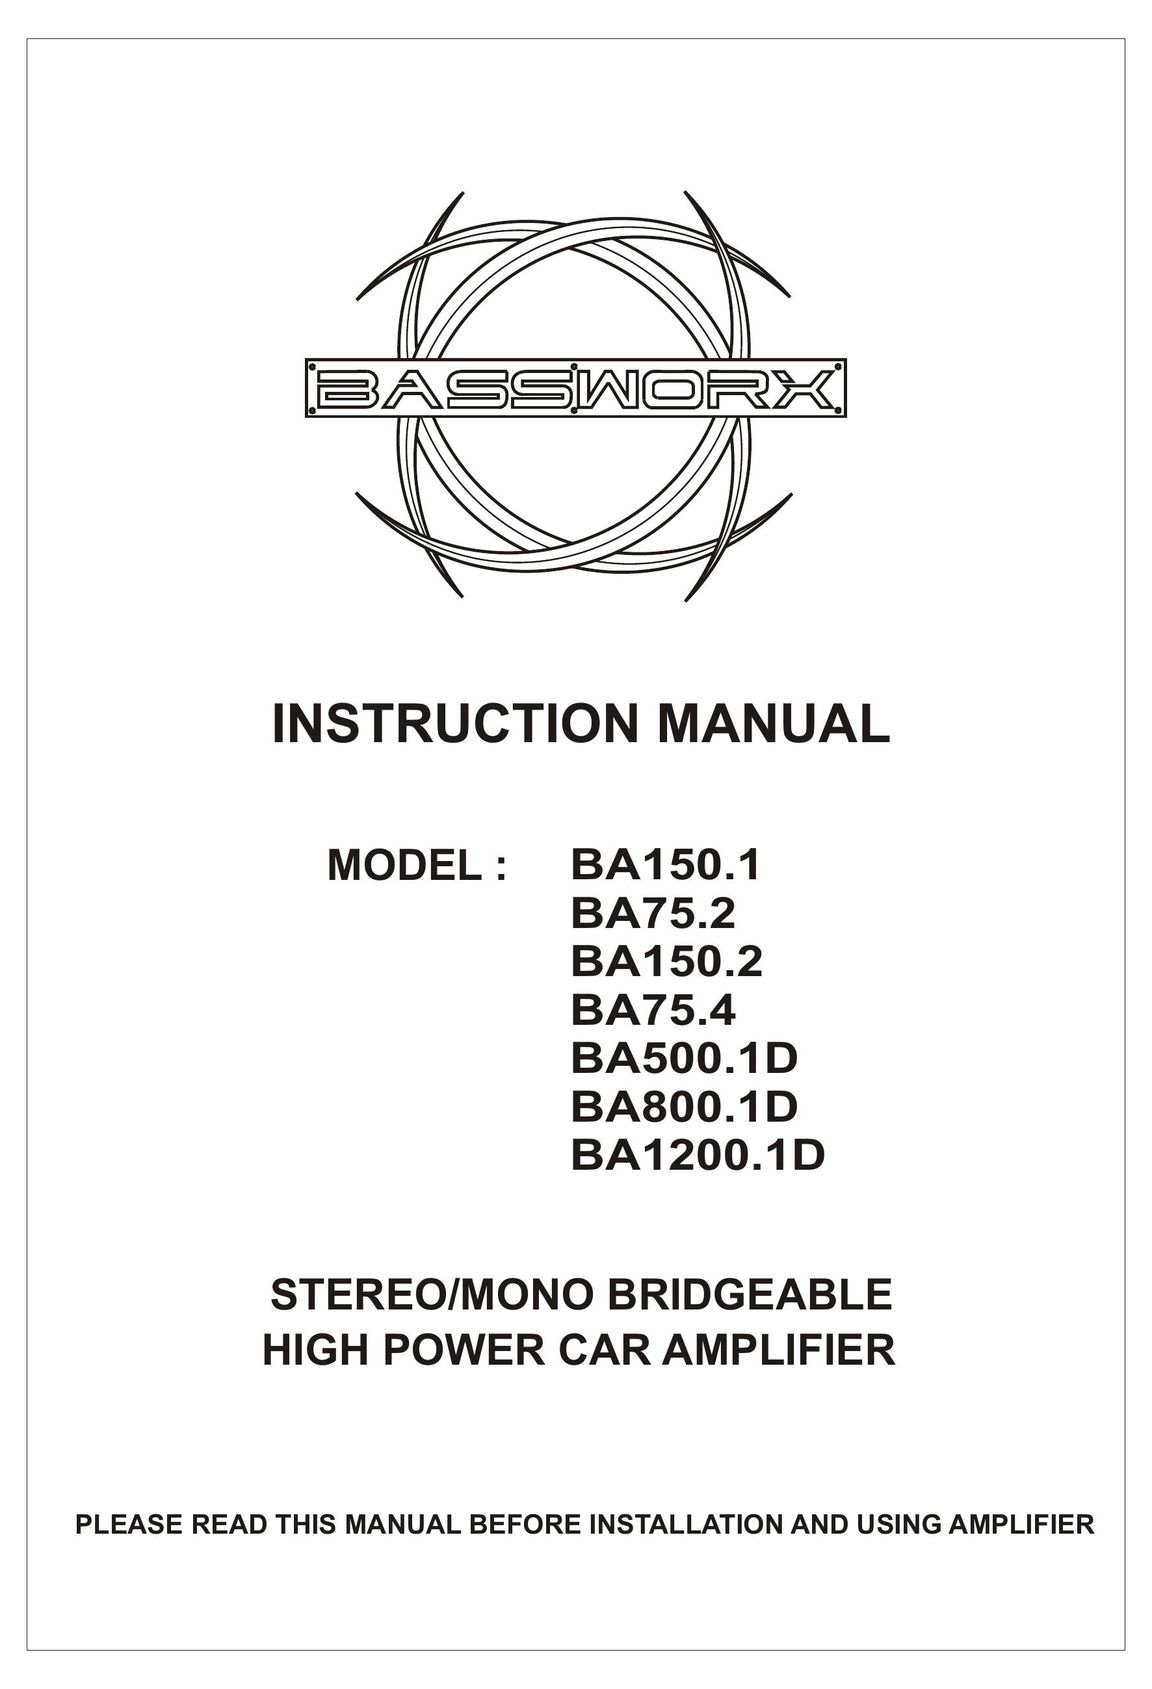 Bassworx BA75.2 Car Amplifier User Manual